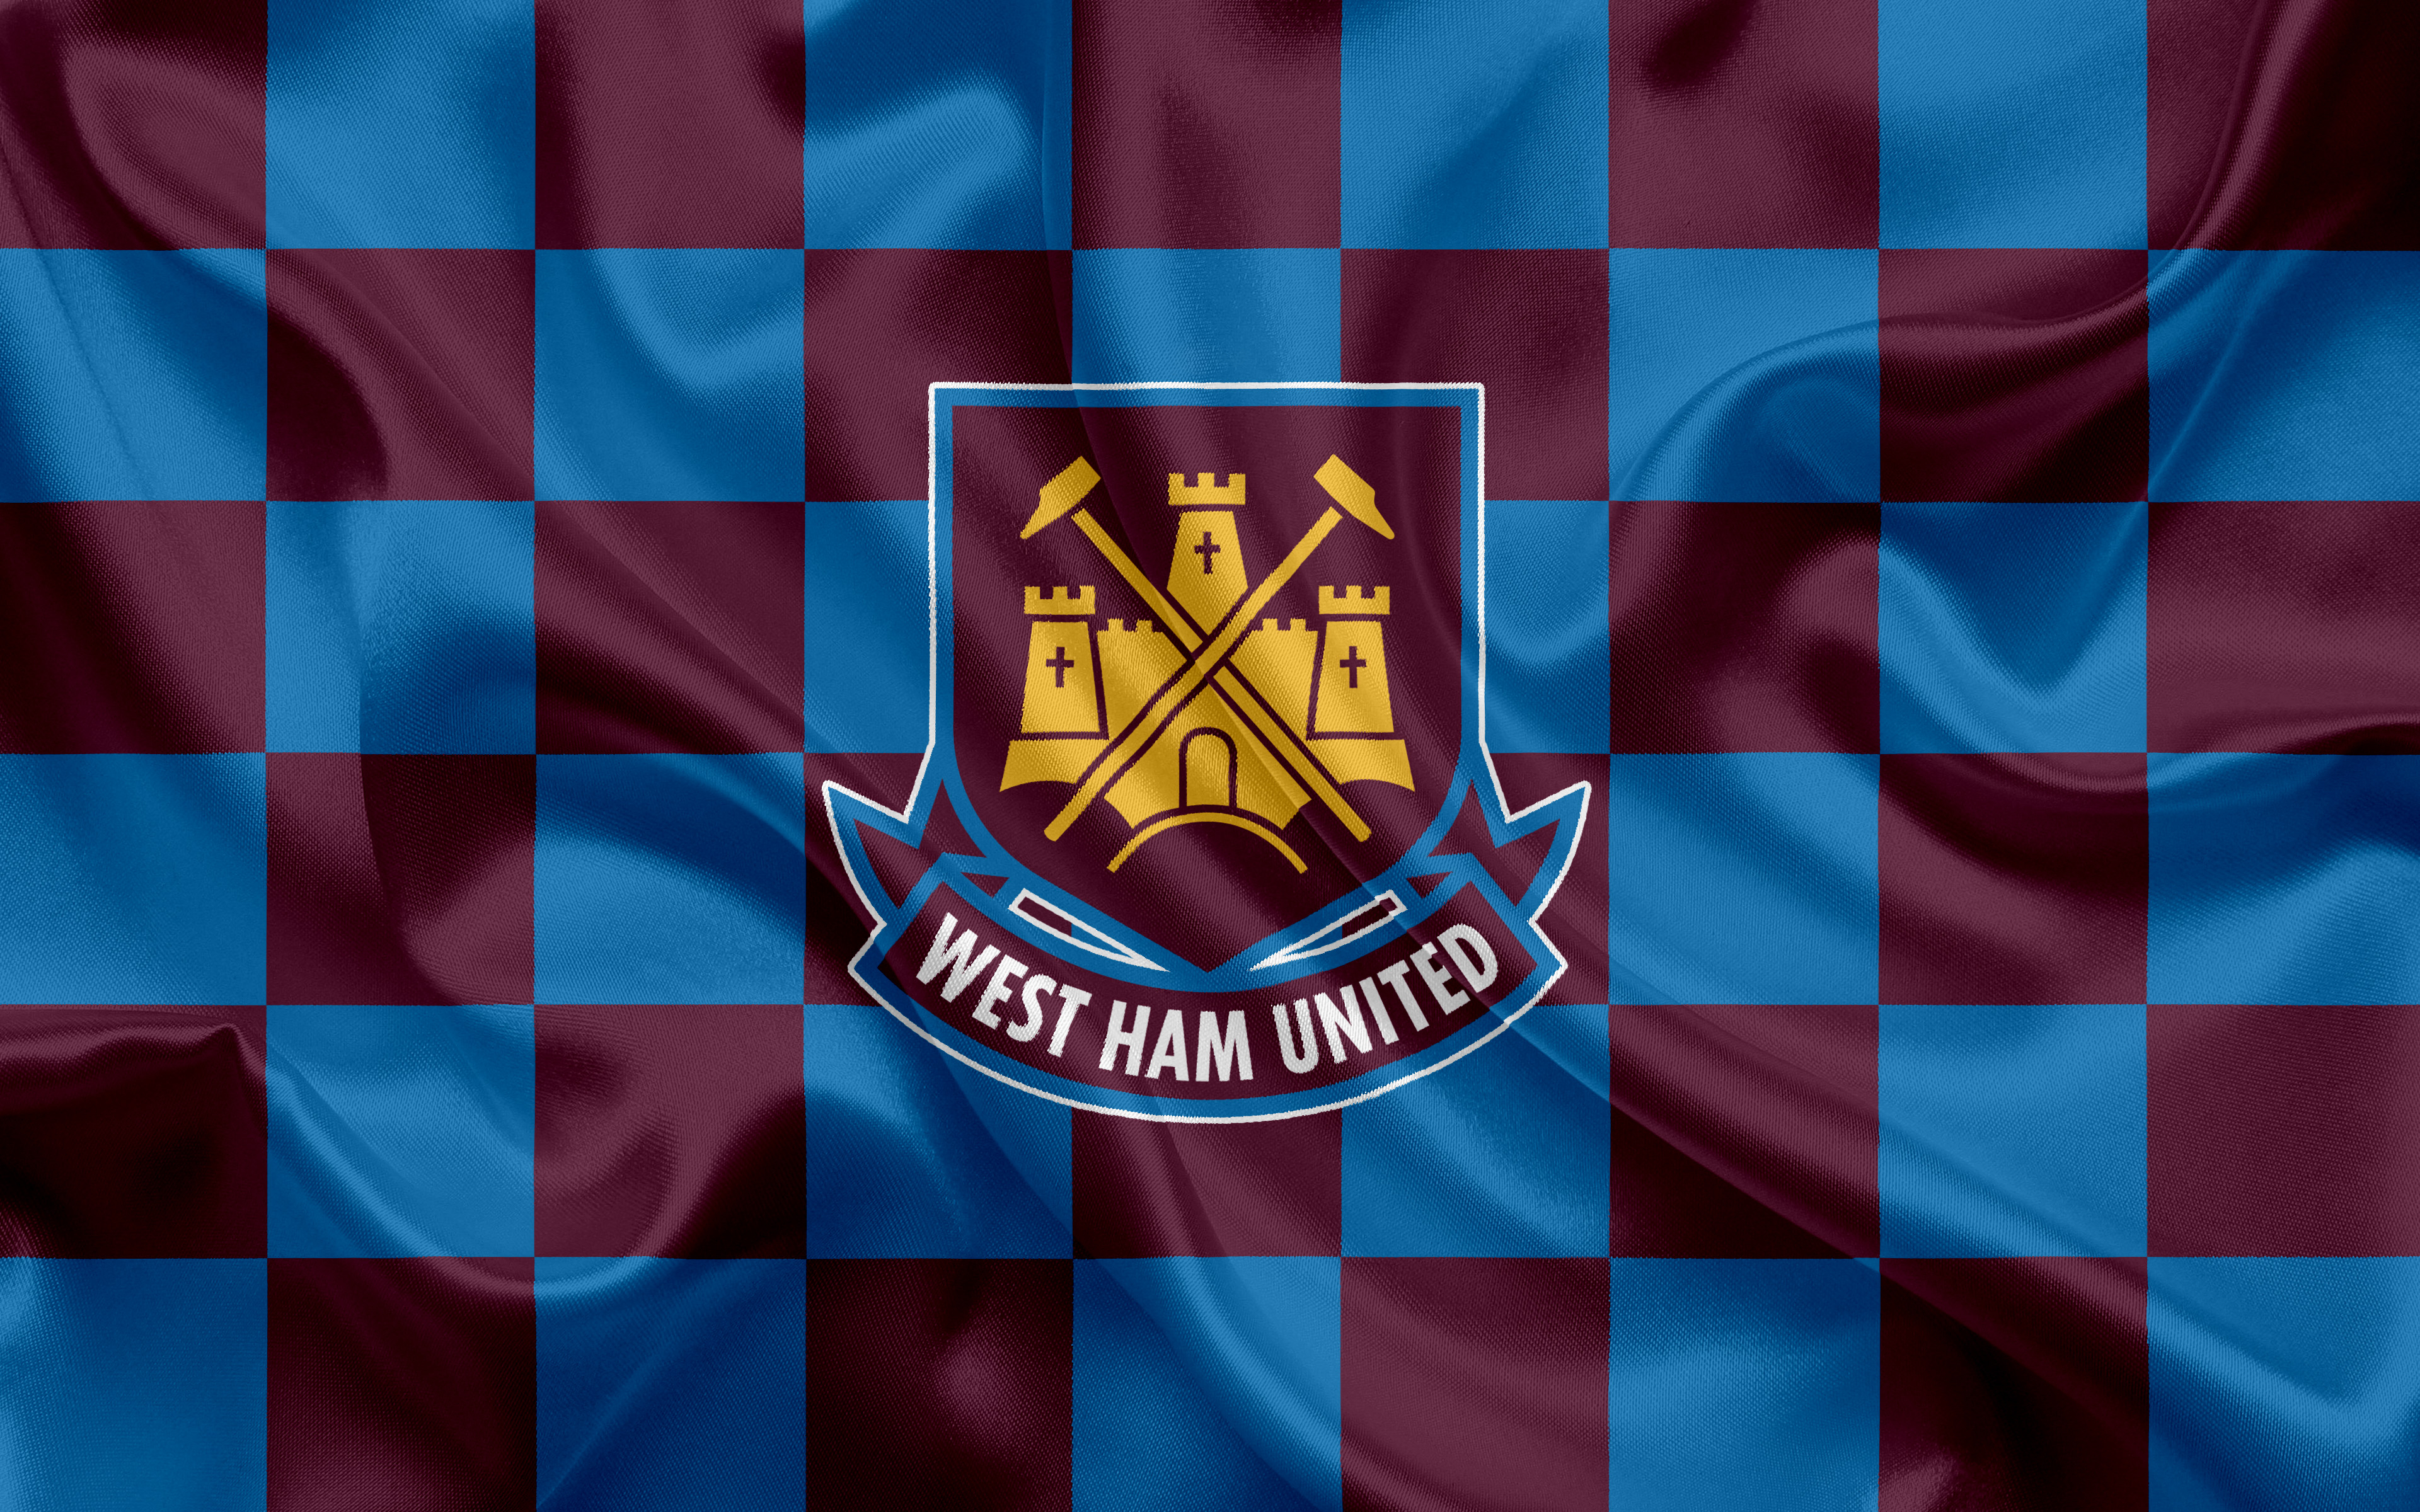 West Ham United F C 4k Ultra HD Wallpaper Background Image